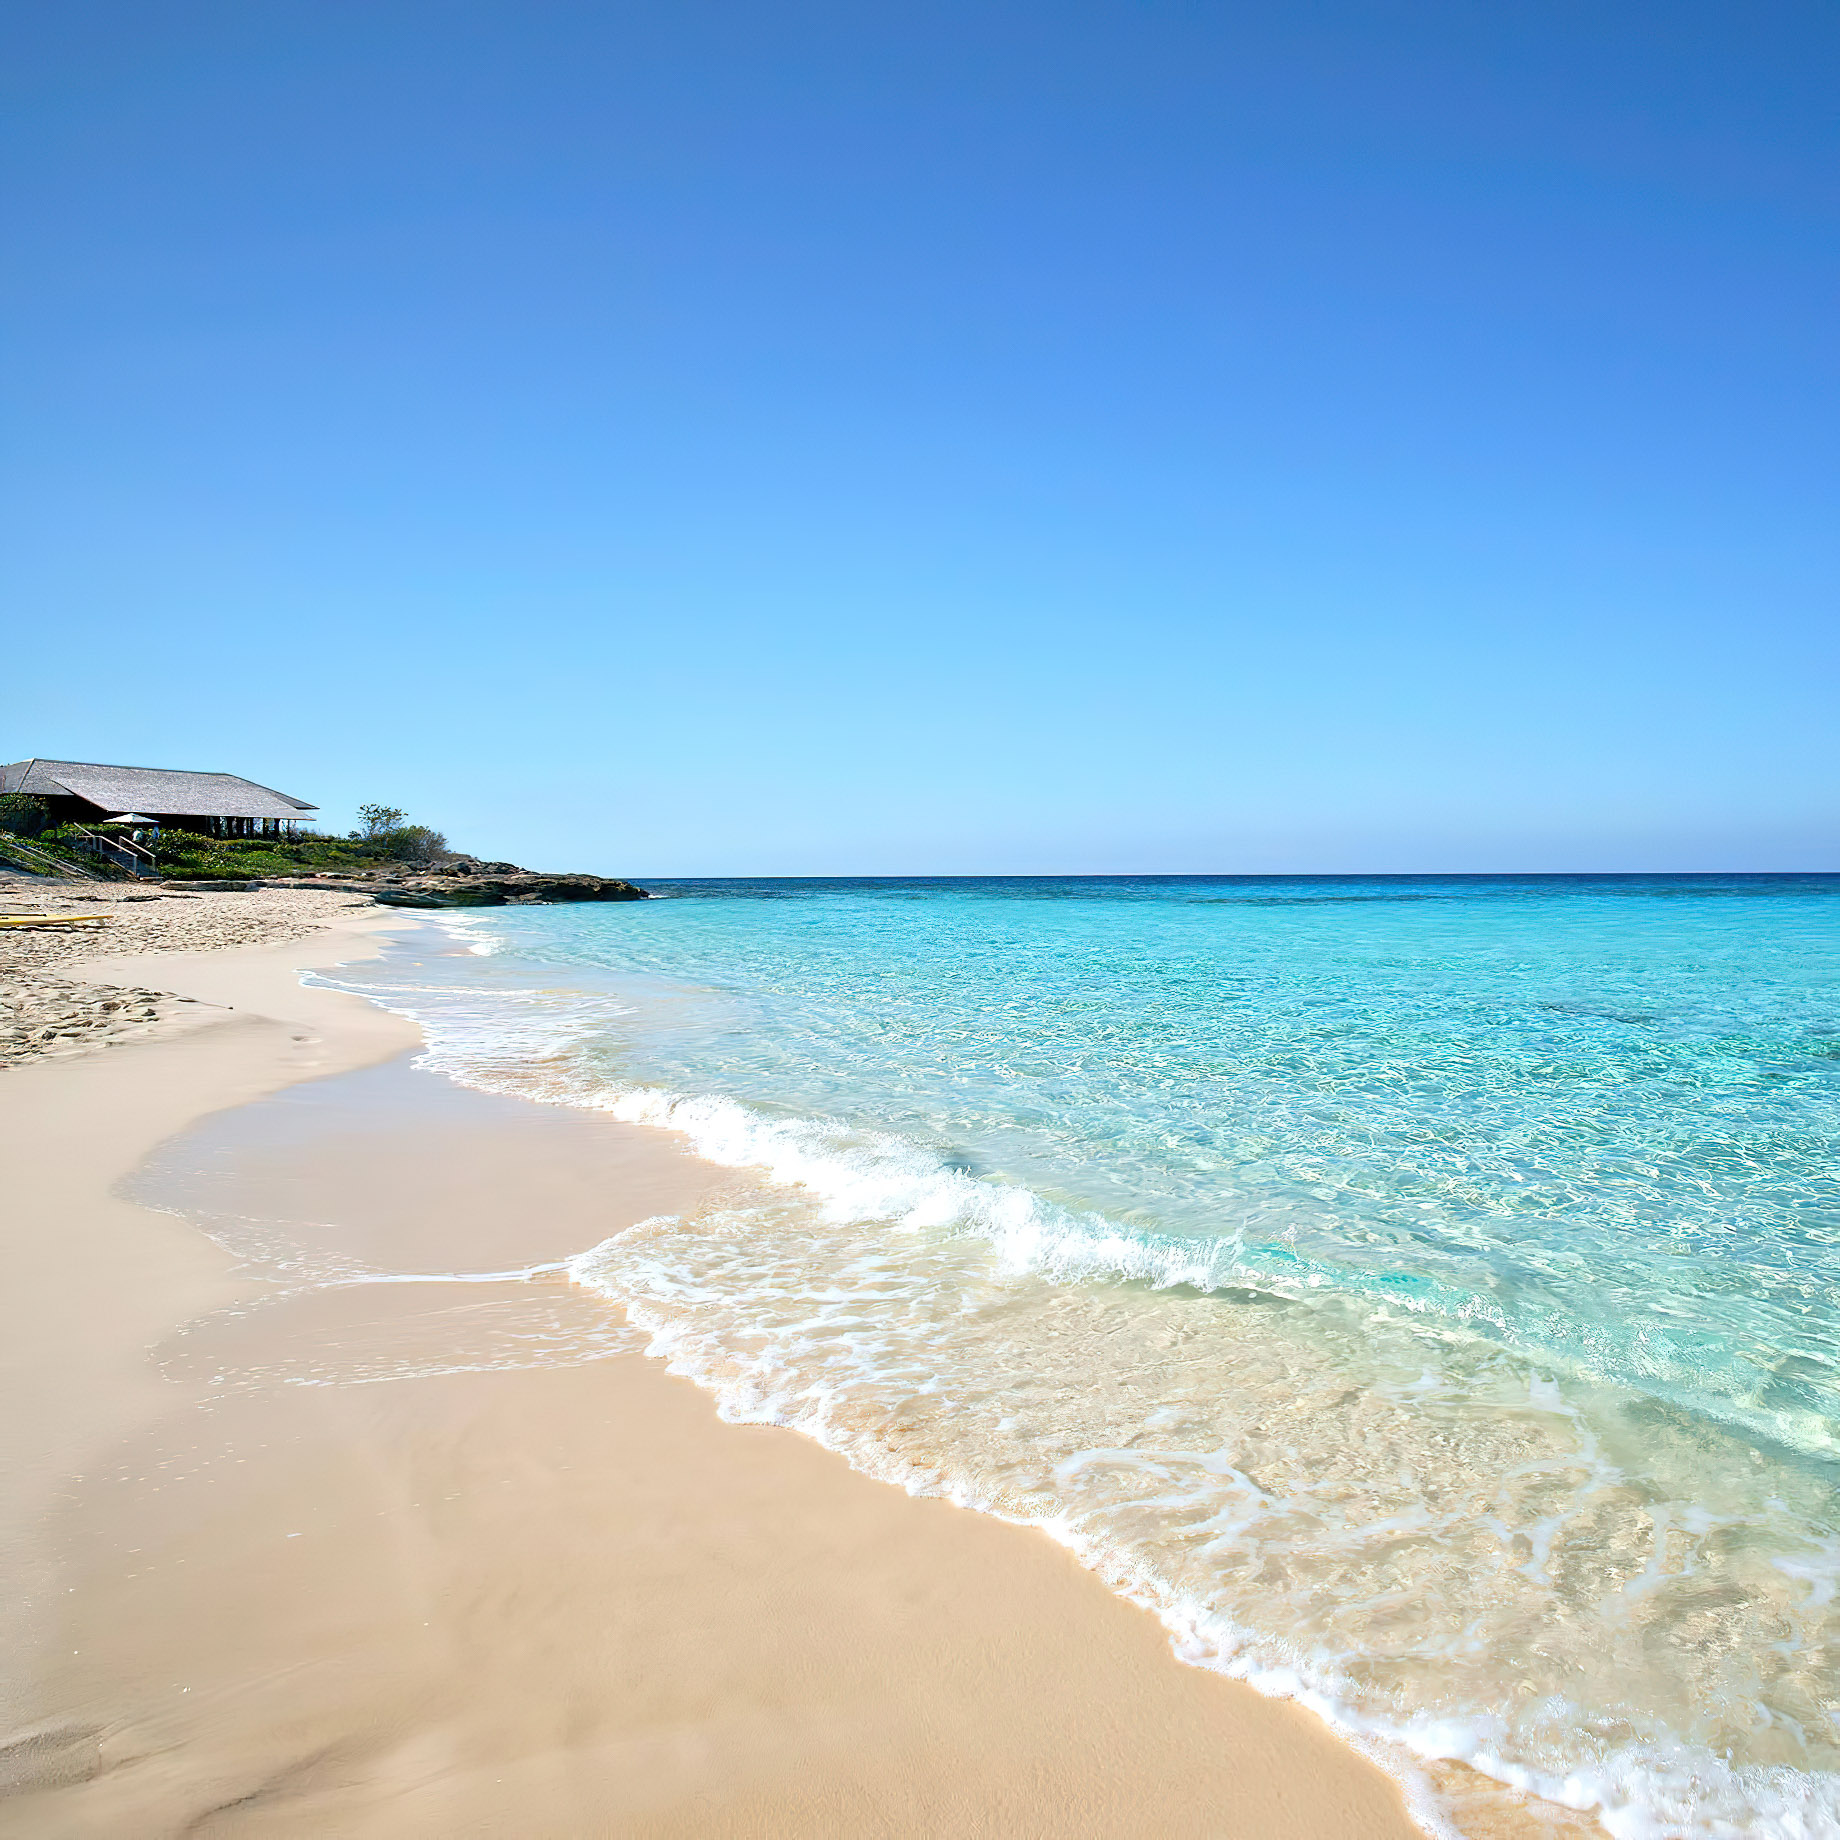 Amanyara Resort - Providenciales, Turks and Caicos Islands - Private Beach